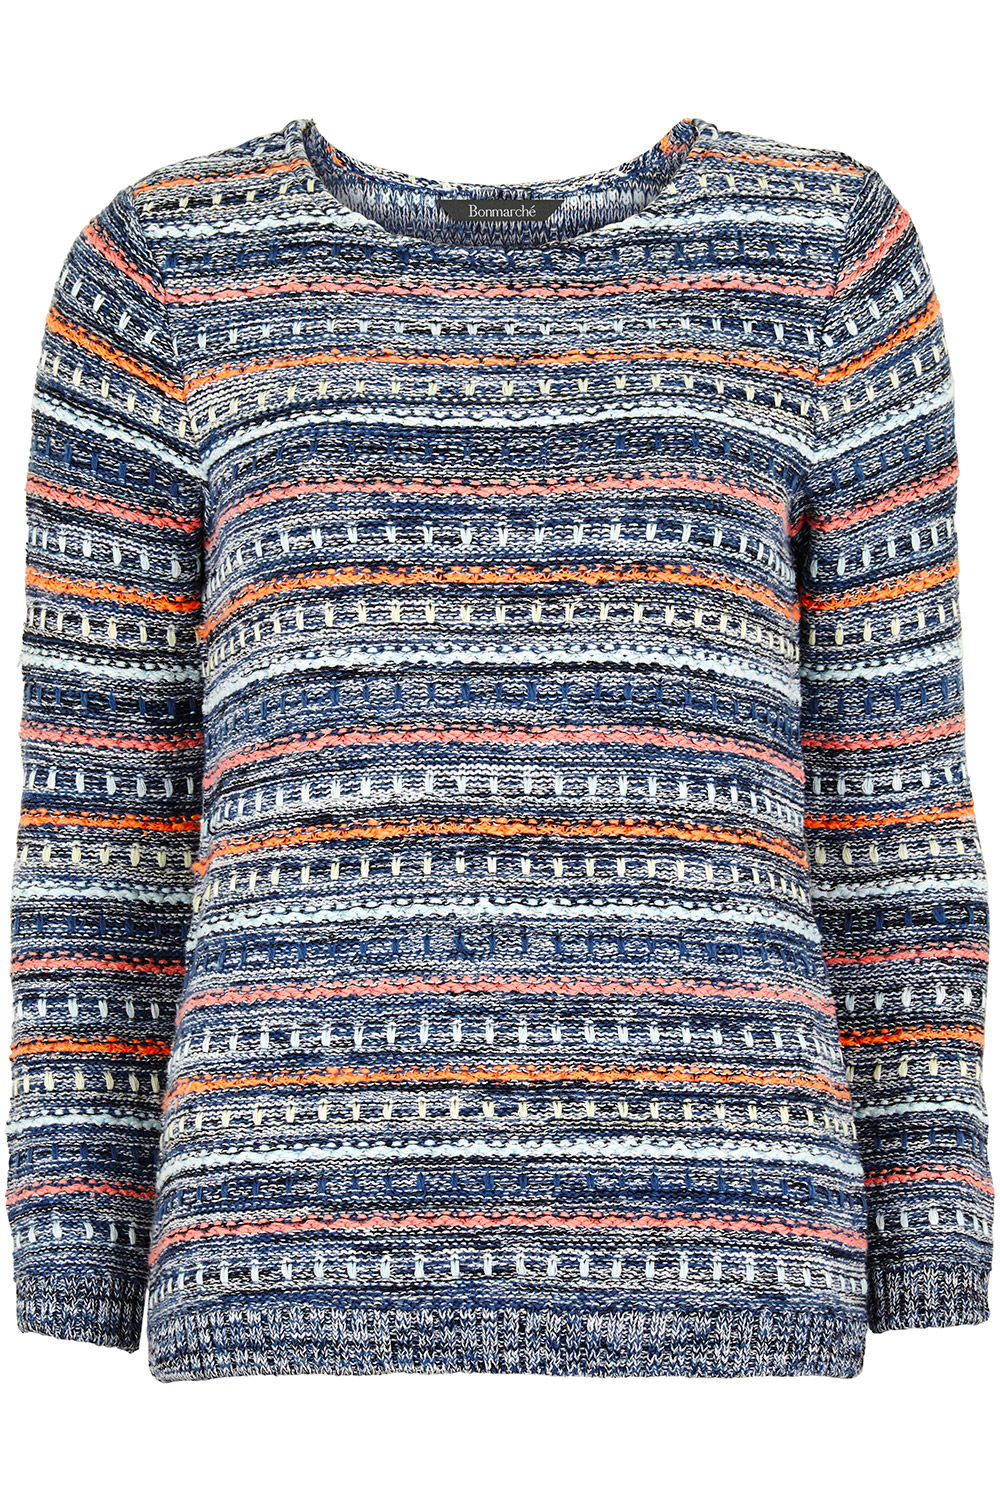 Bonmarche Textured Stripe Knit